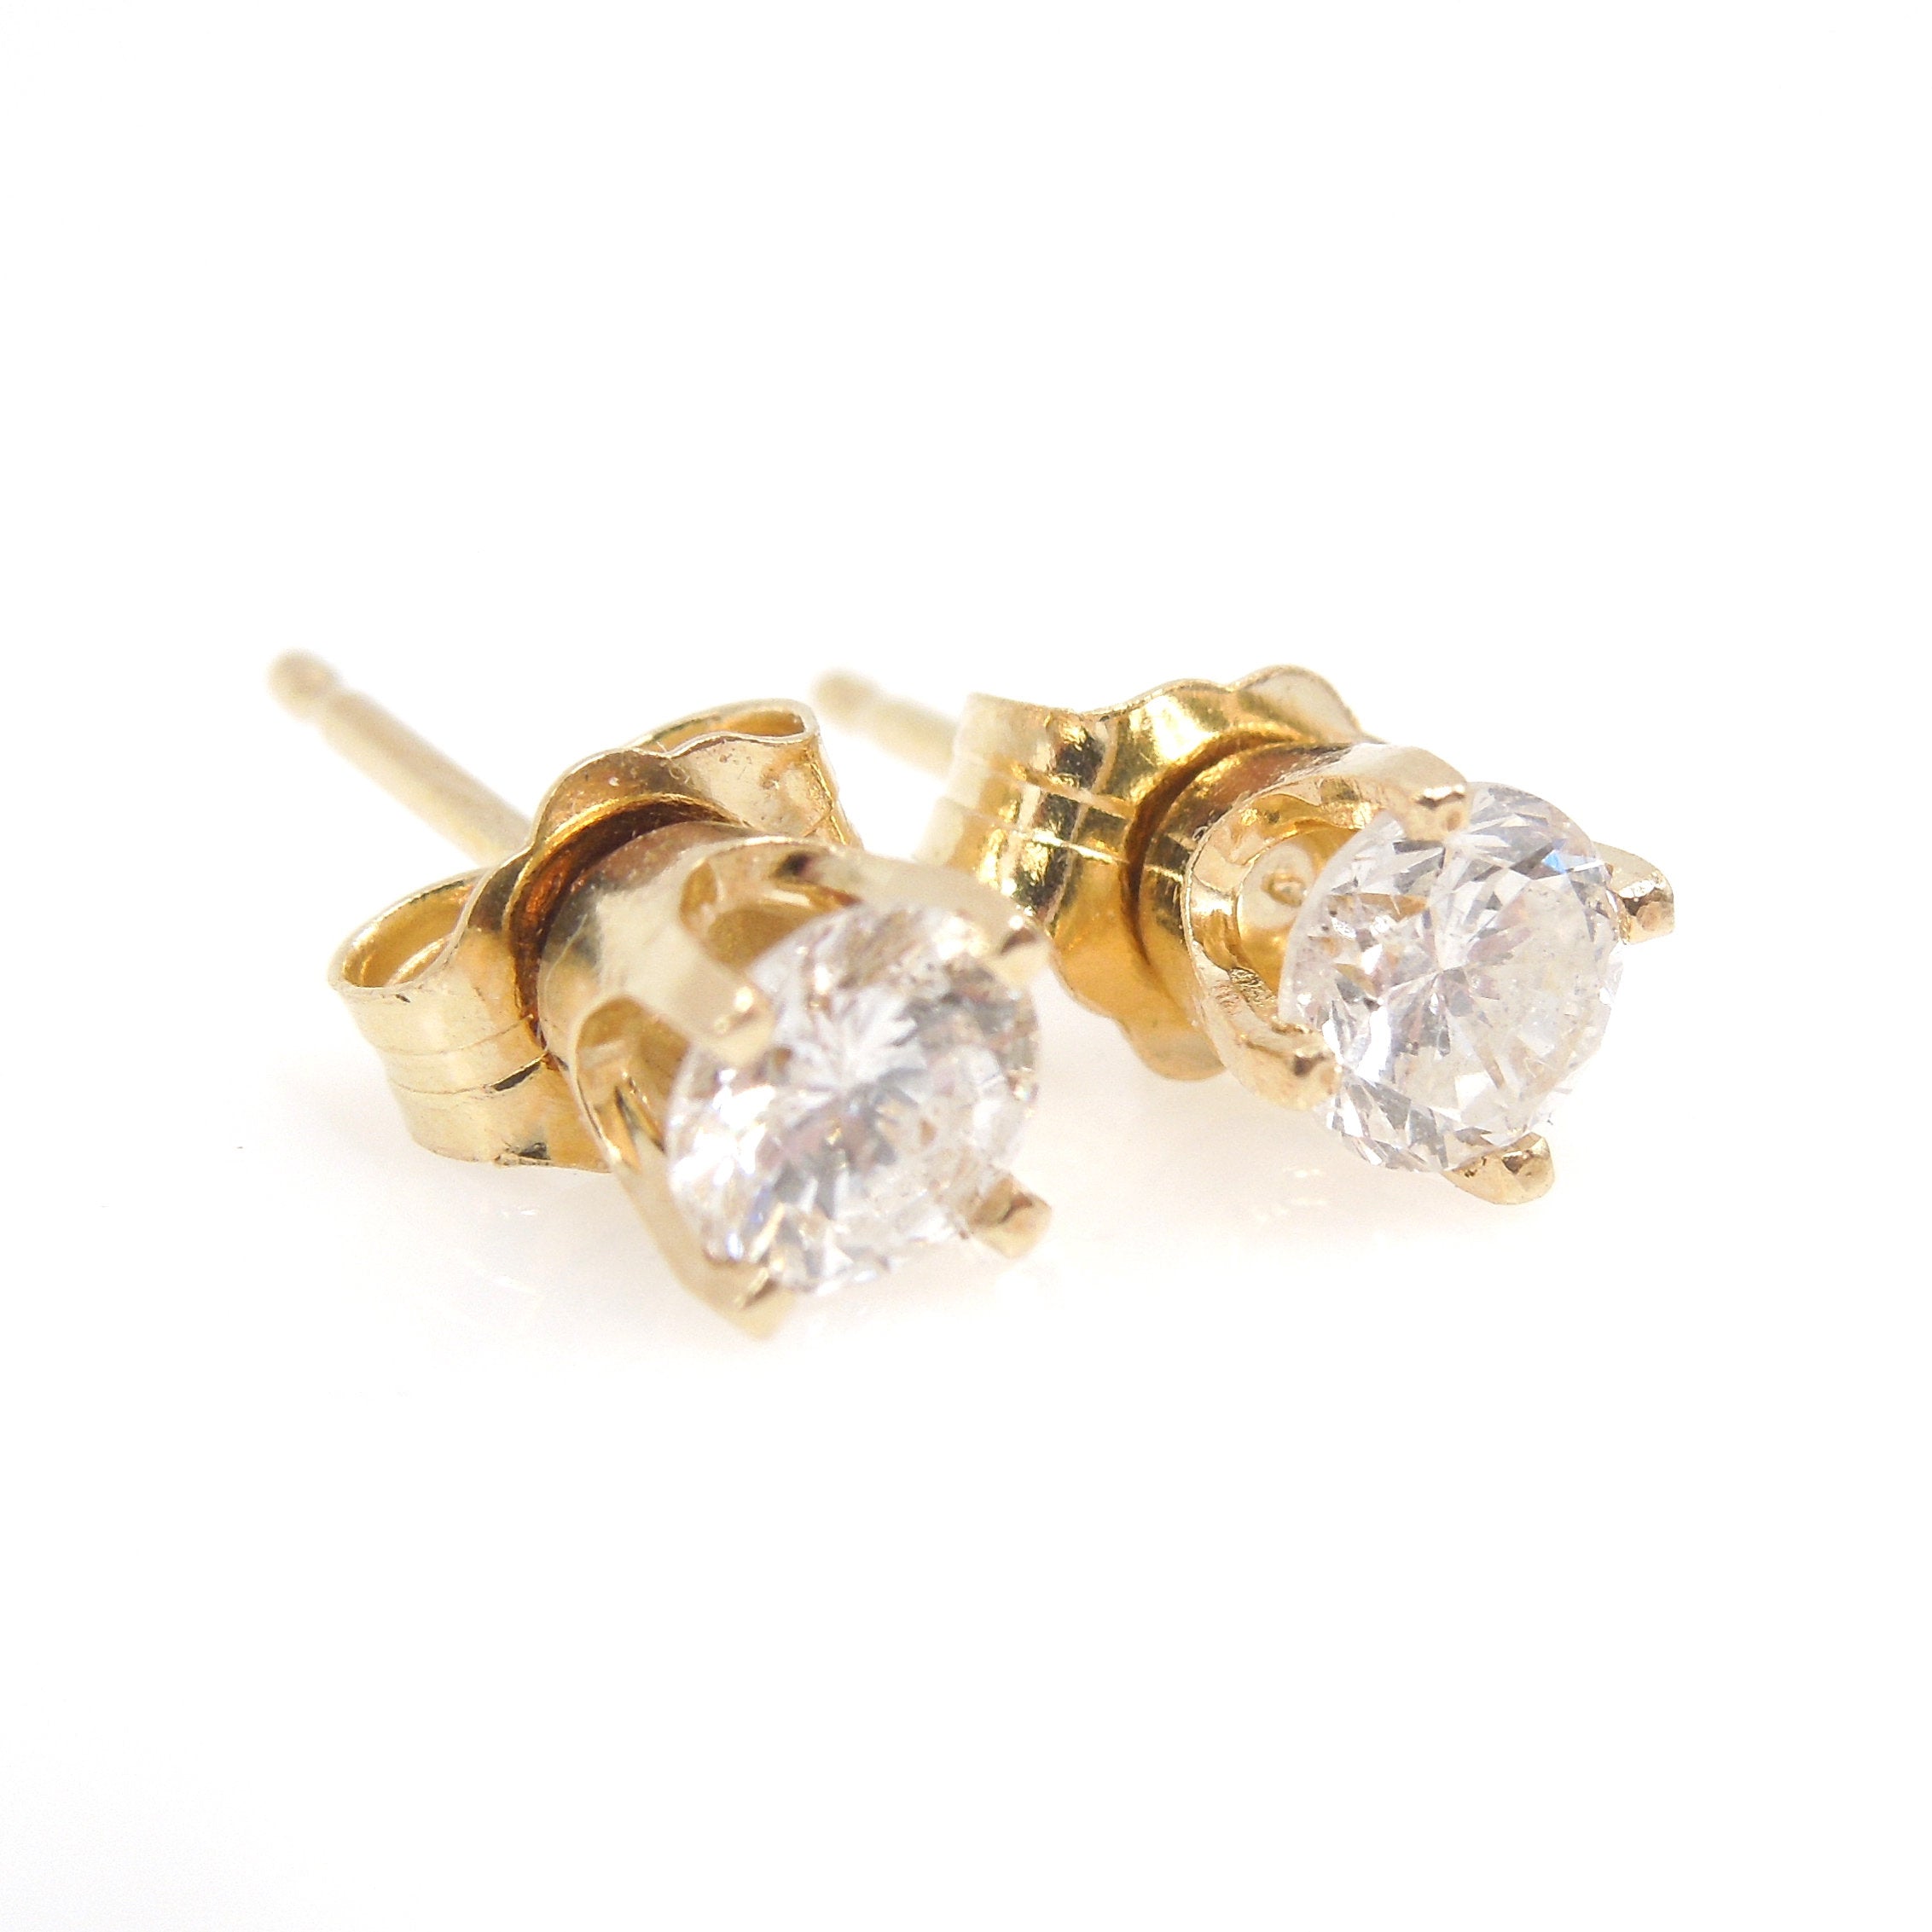 0.50ctw Pair of Diamond Stud Earrings in Yellow Gold